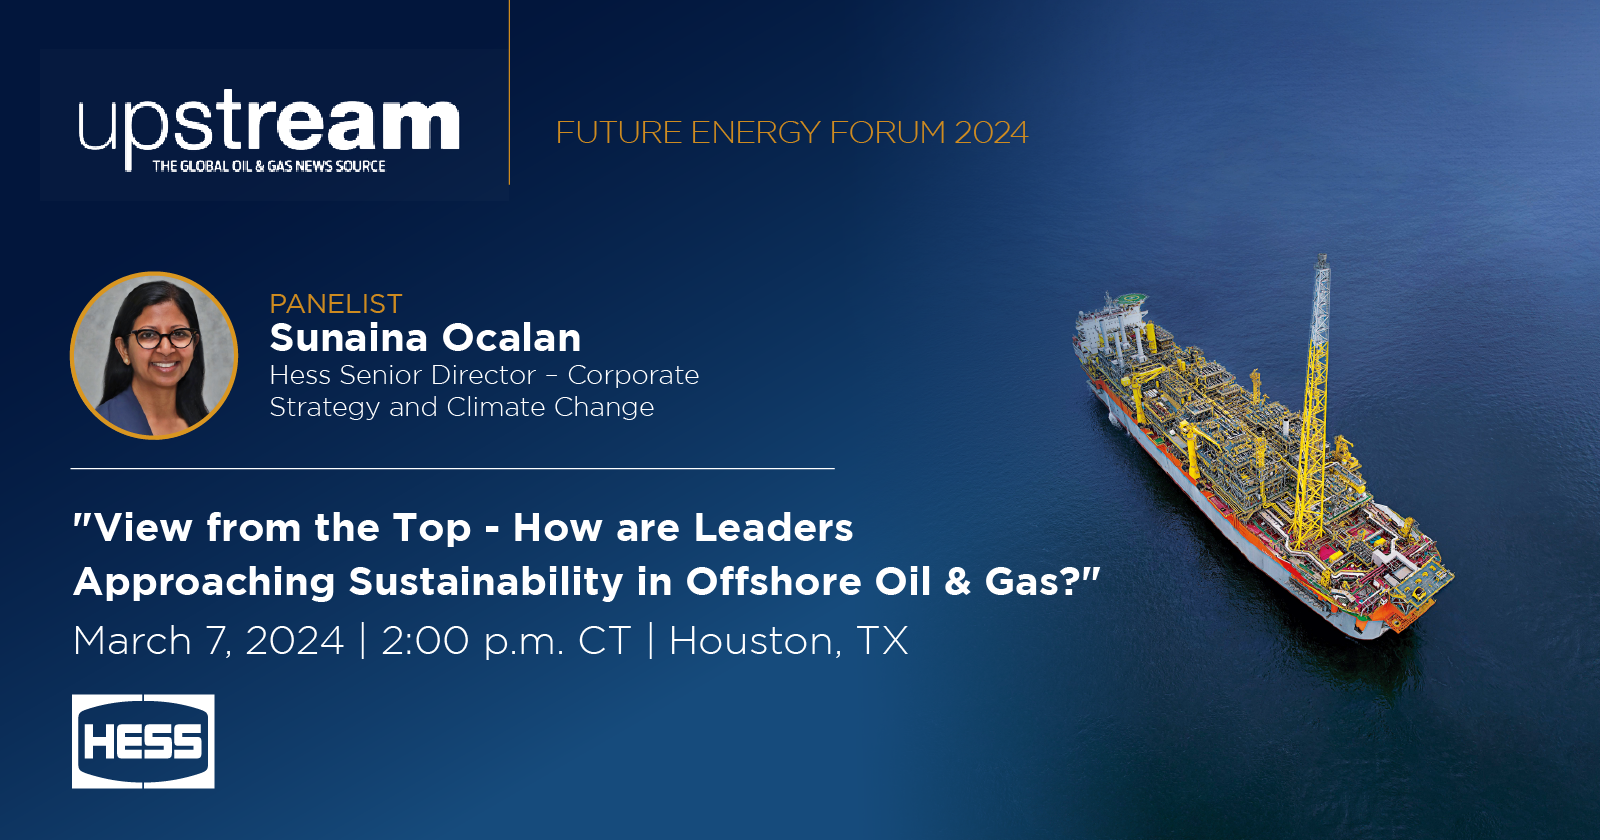 Sunaina Ocalan Panelist at Upstream Future Energy Forum 2024